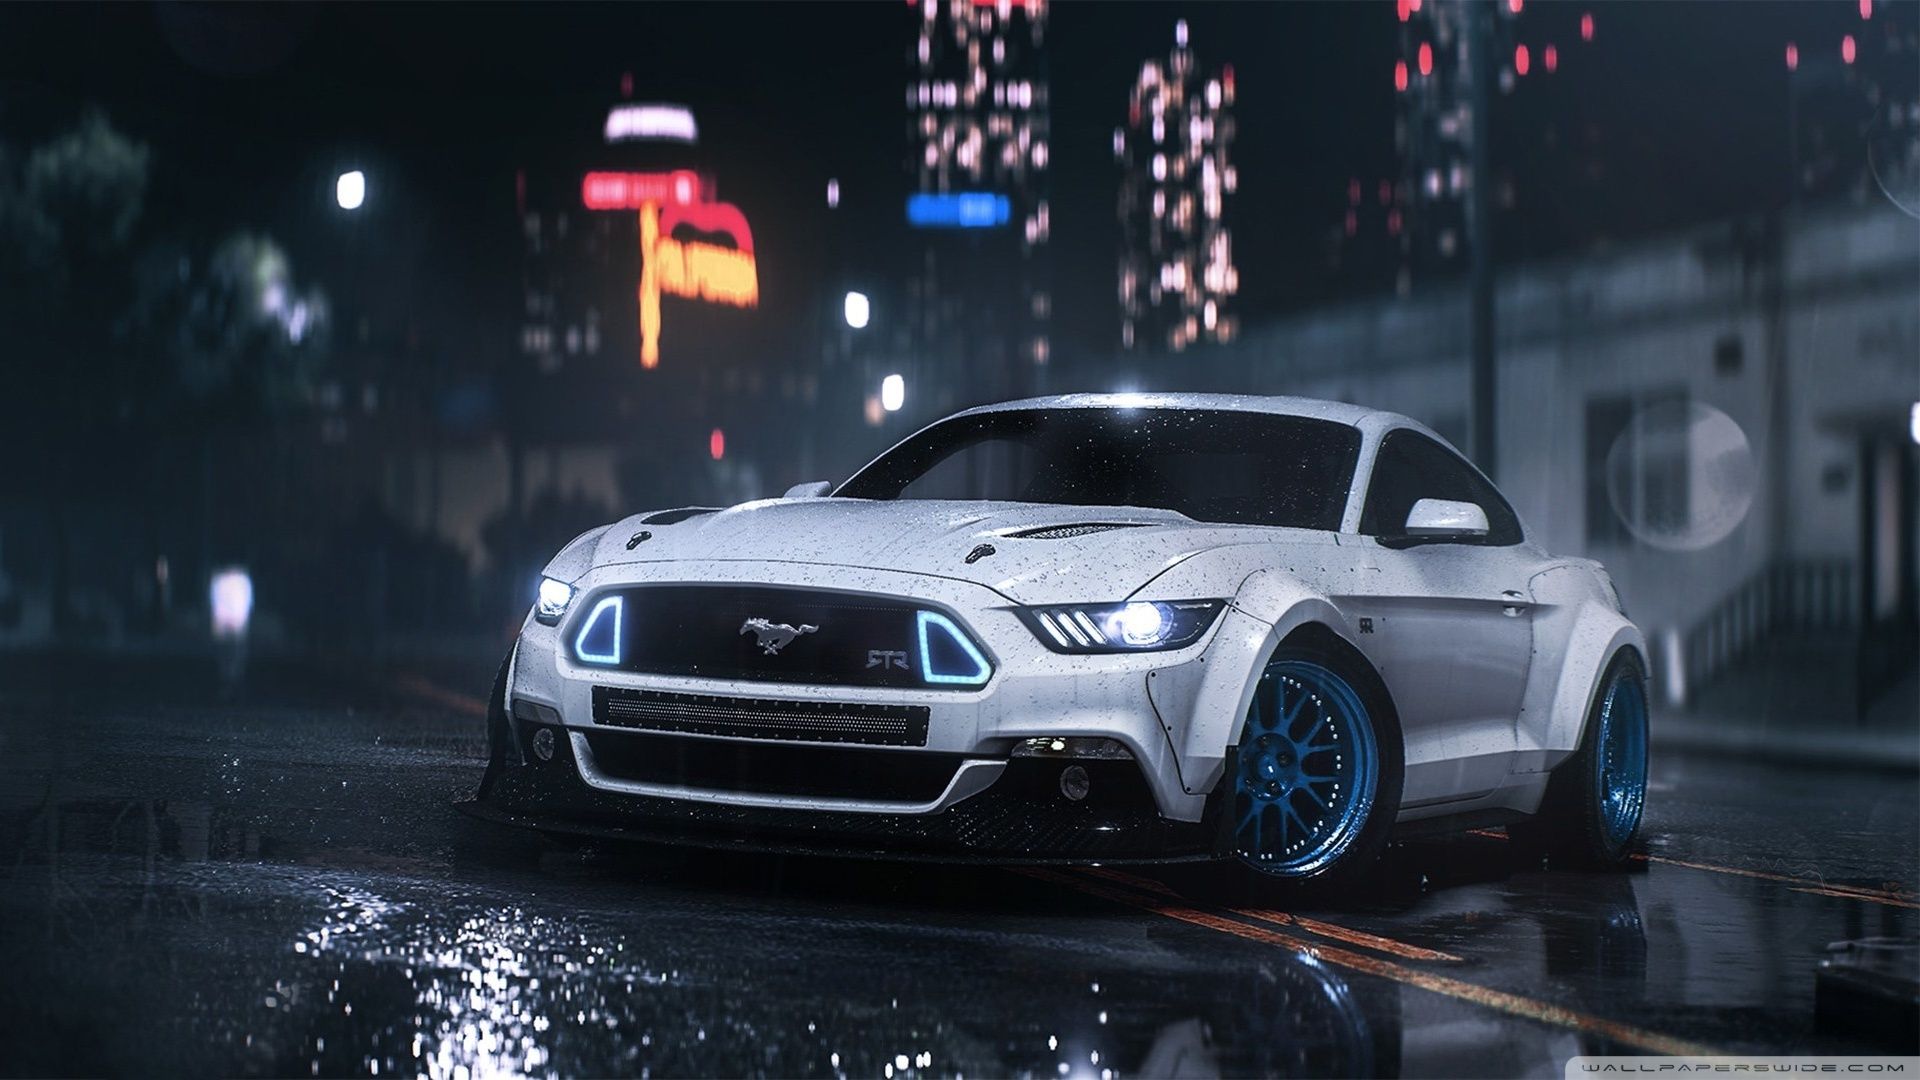 Fondos de pantalla de Ford Mustang - FondosMil